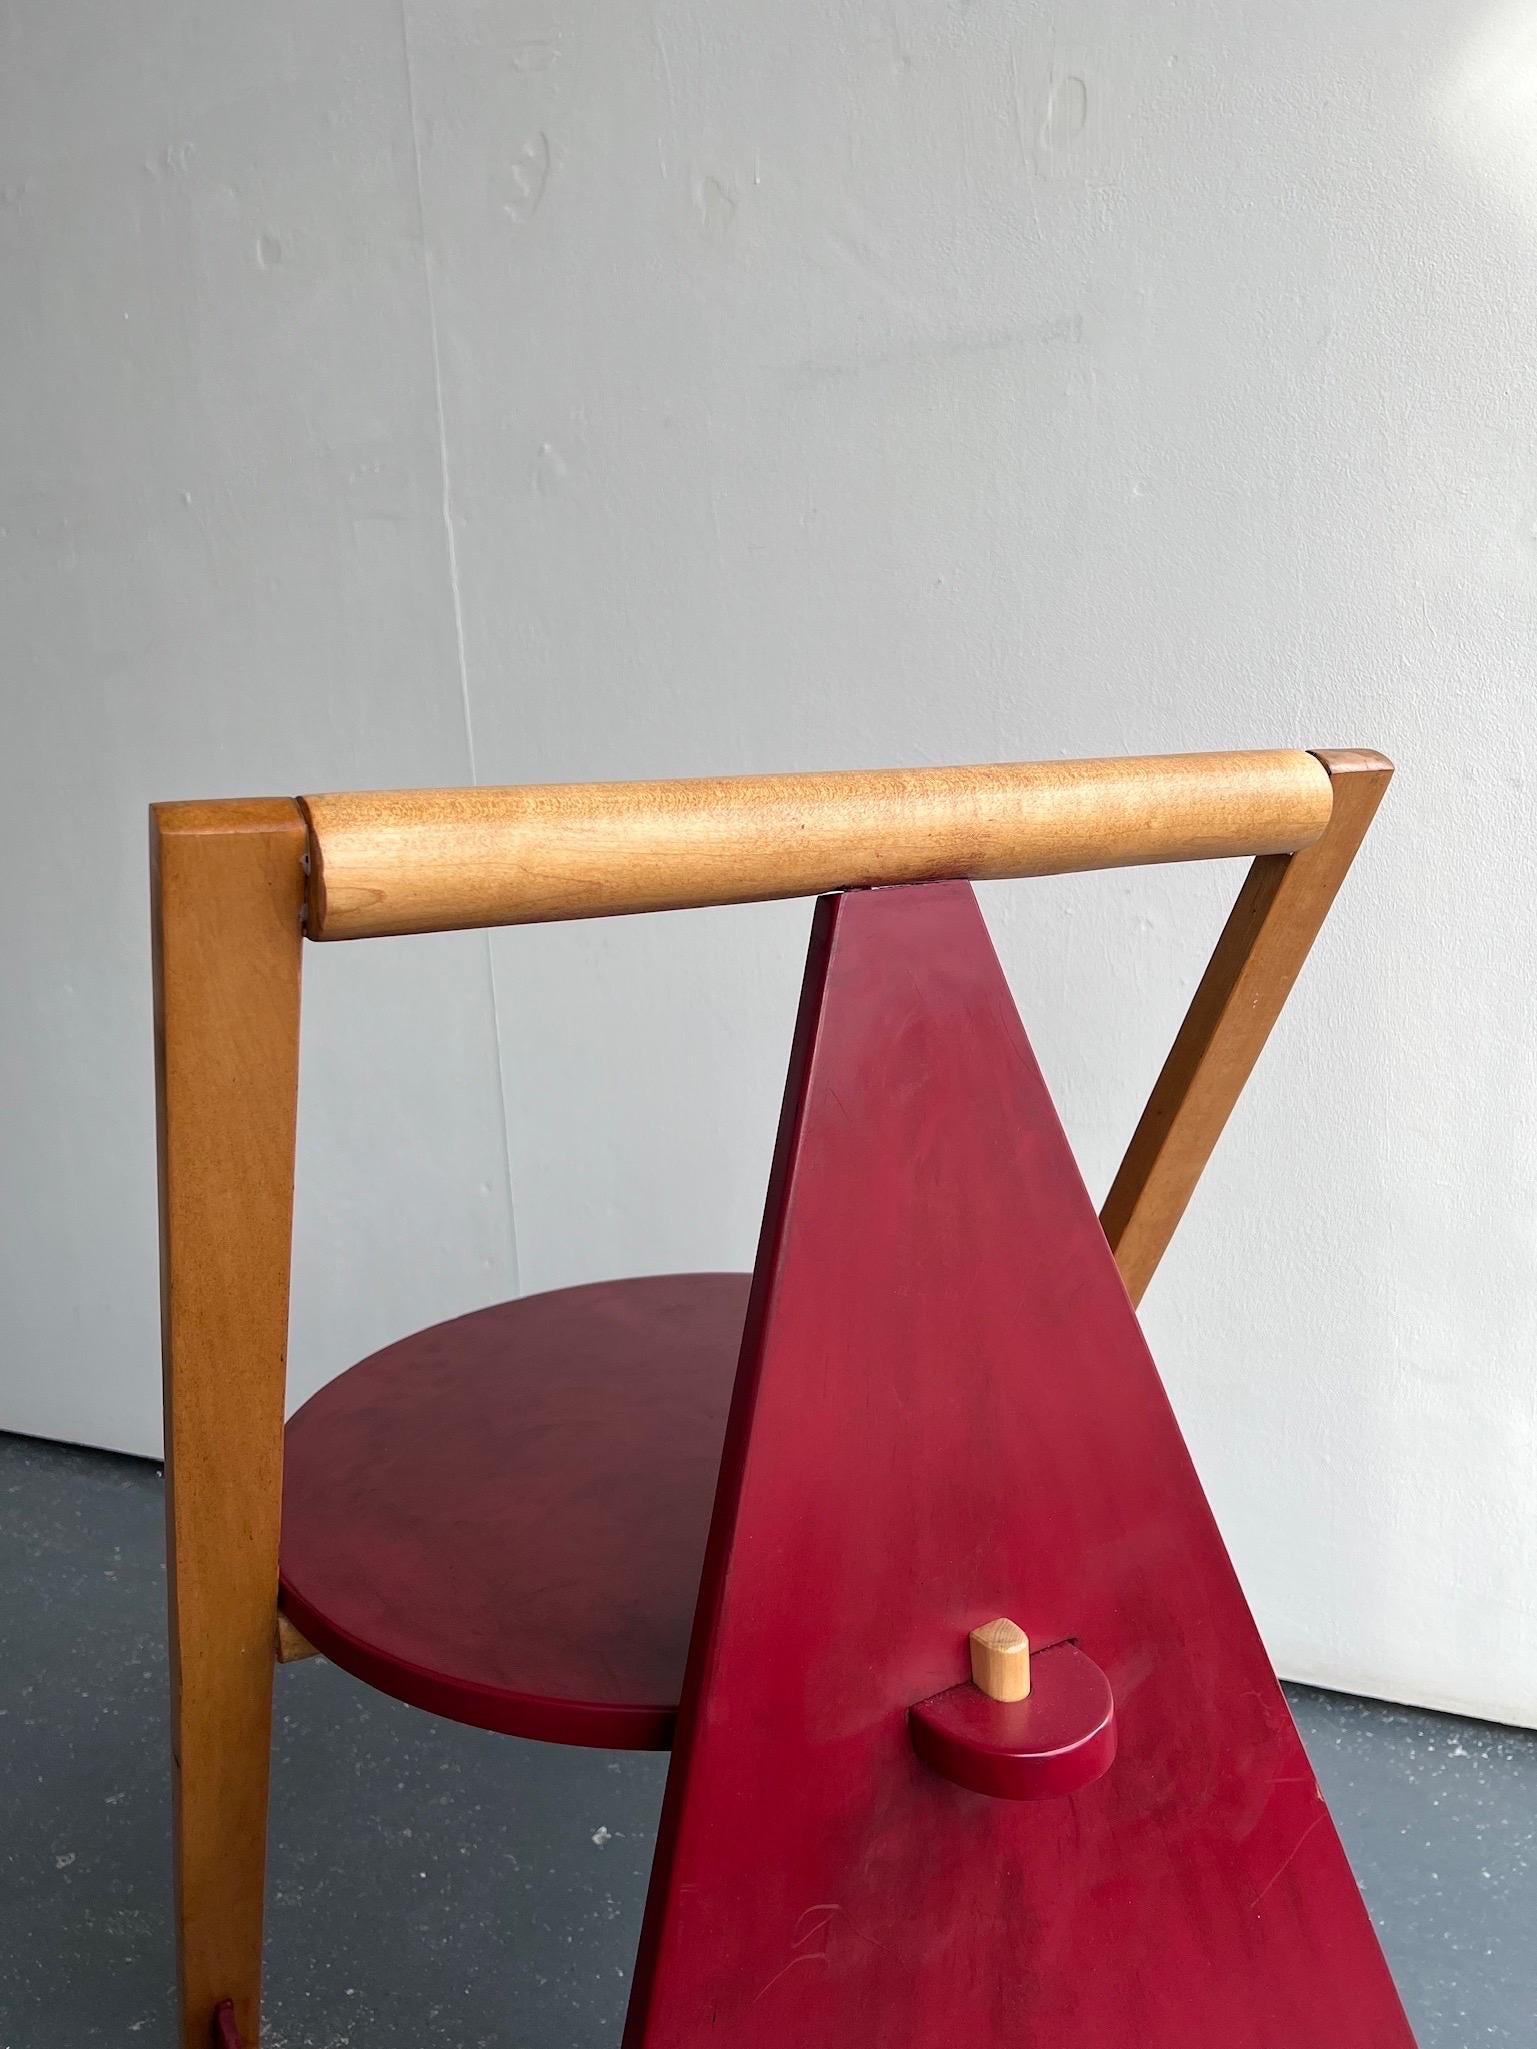 European Triangular Wooden Memphis Style Chair